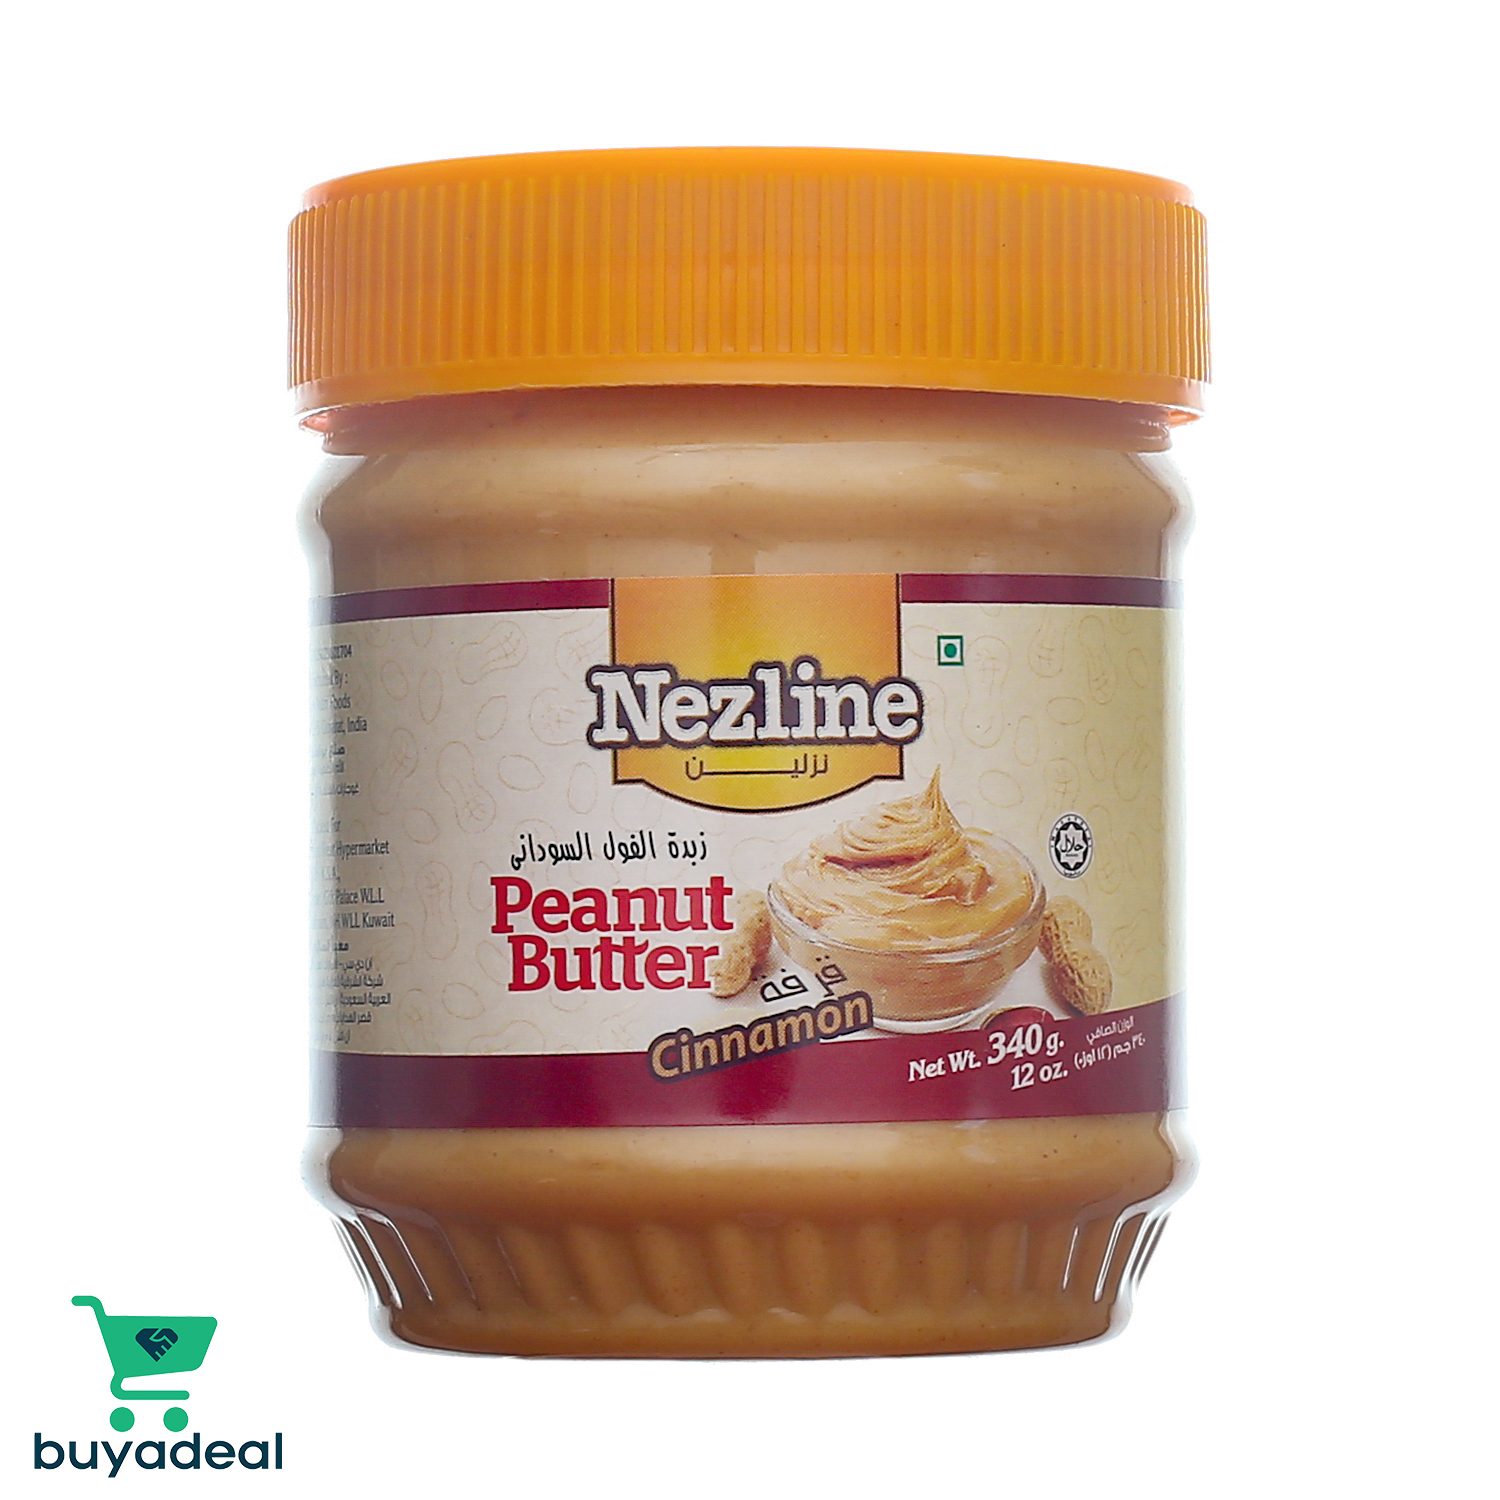 Buyadeal Product Nezline Peanut Butter Cinnamon -340g